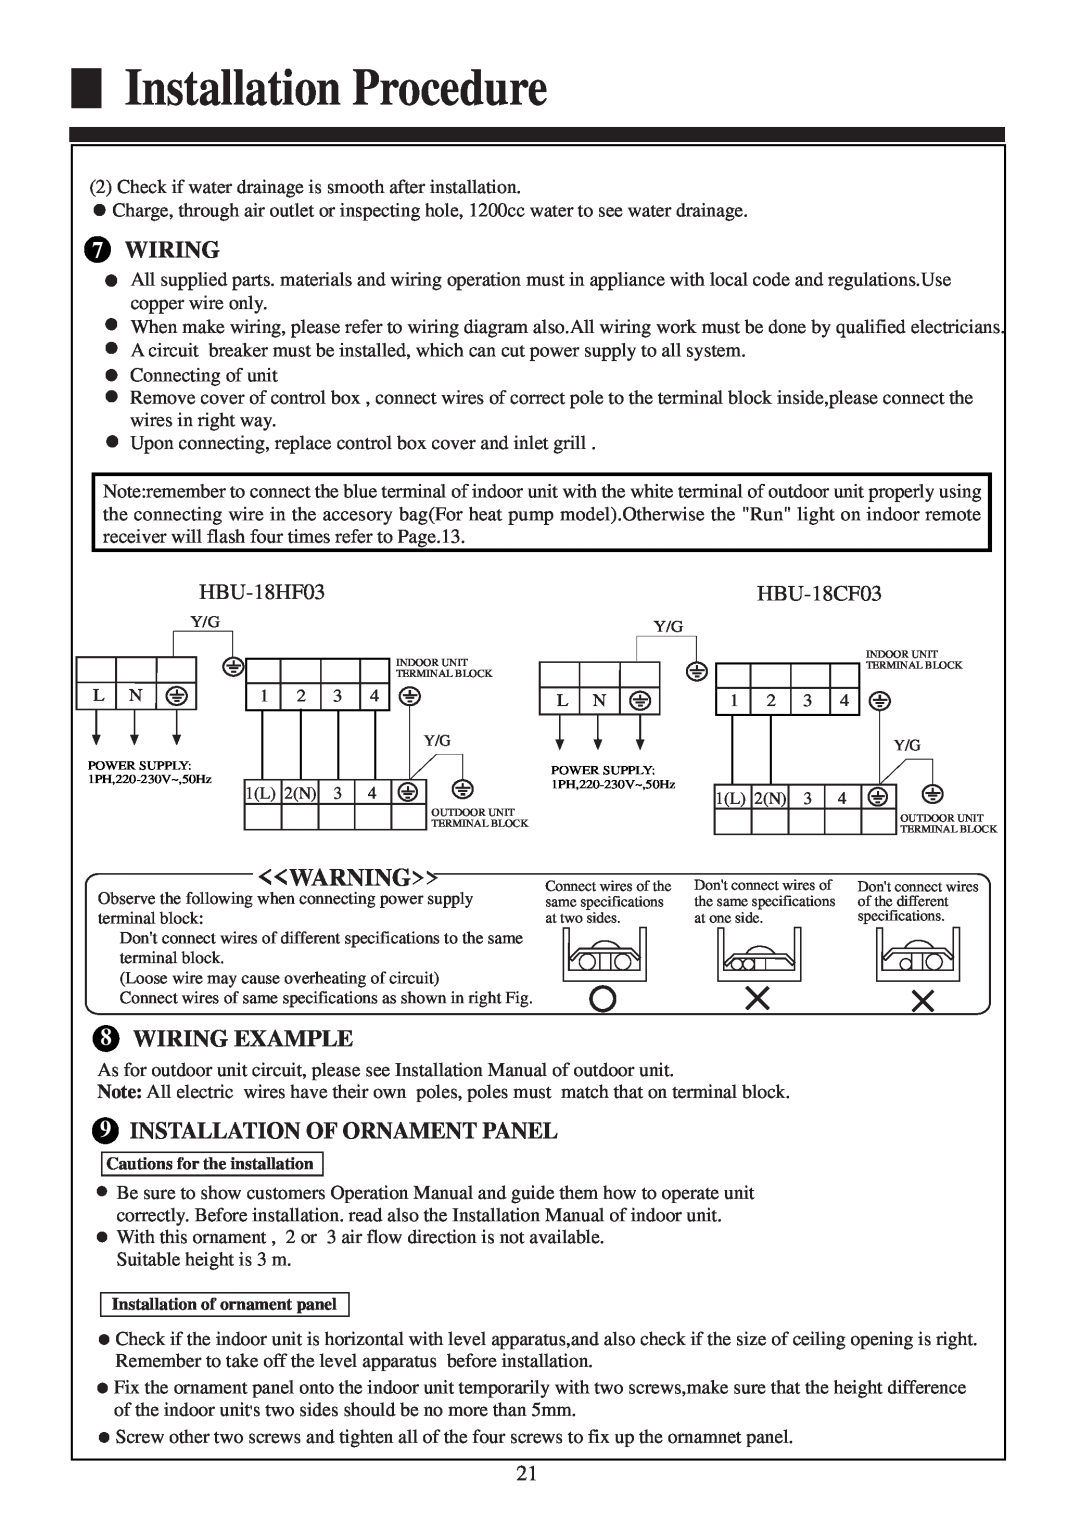 Haier HBU-18CF03, HBU-18HF03 operation manual Installation Procedure, Wiring Example, Installation Of Ornament Panel 